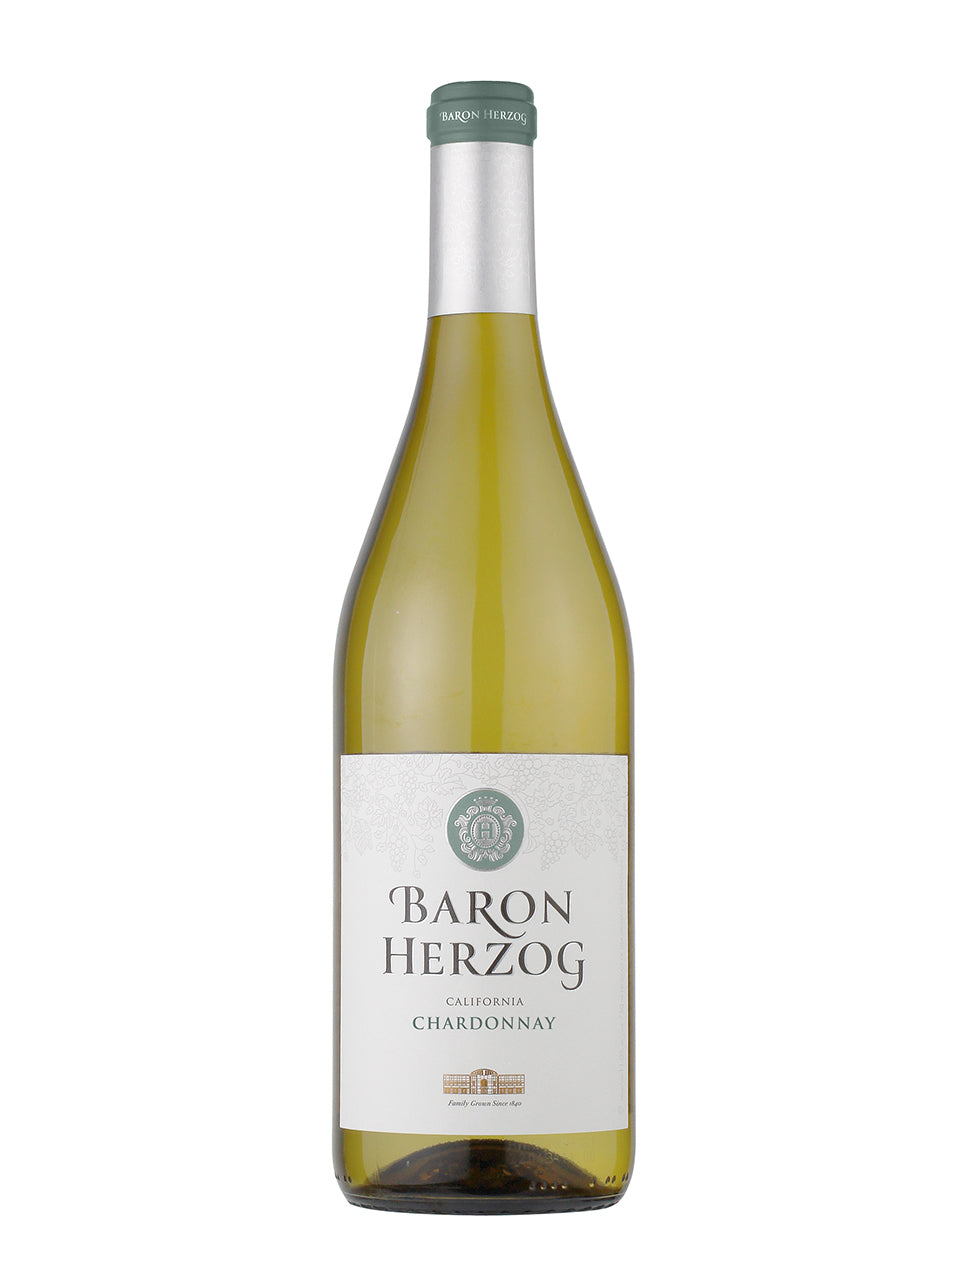 Baron Herzog Chardonnay KPM 750 mL bottle VINTAGES